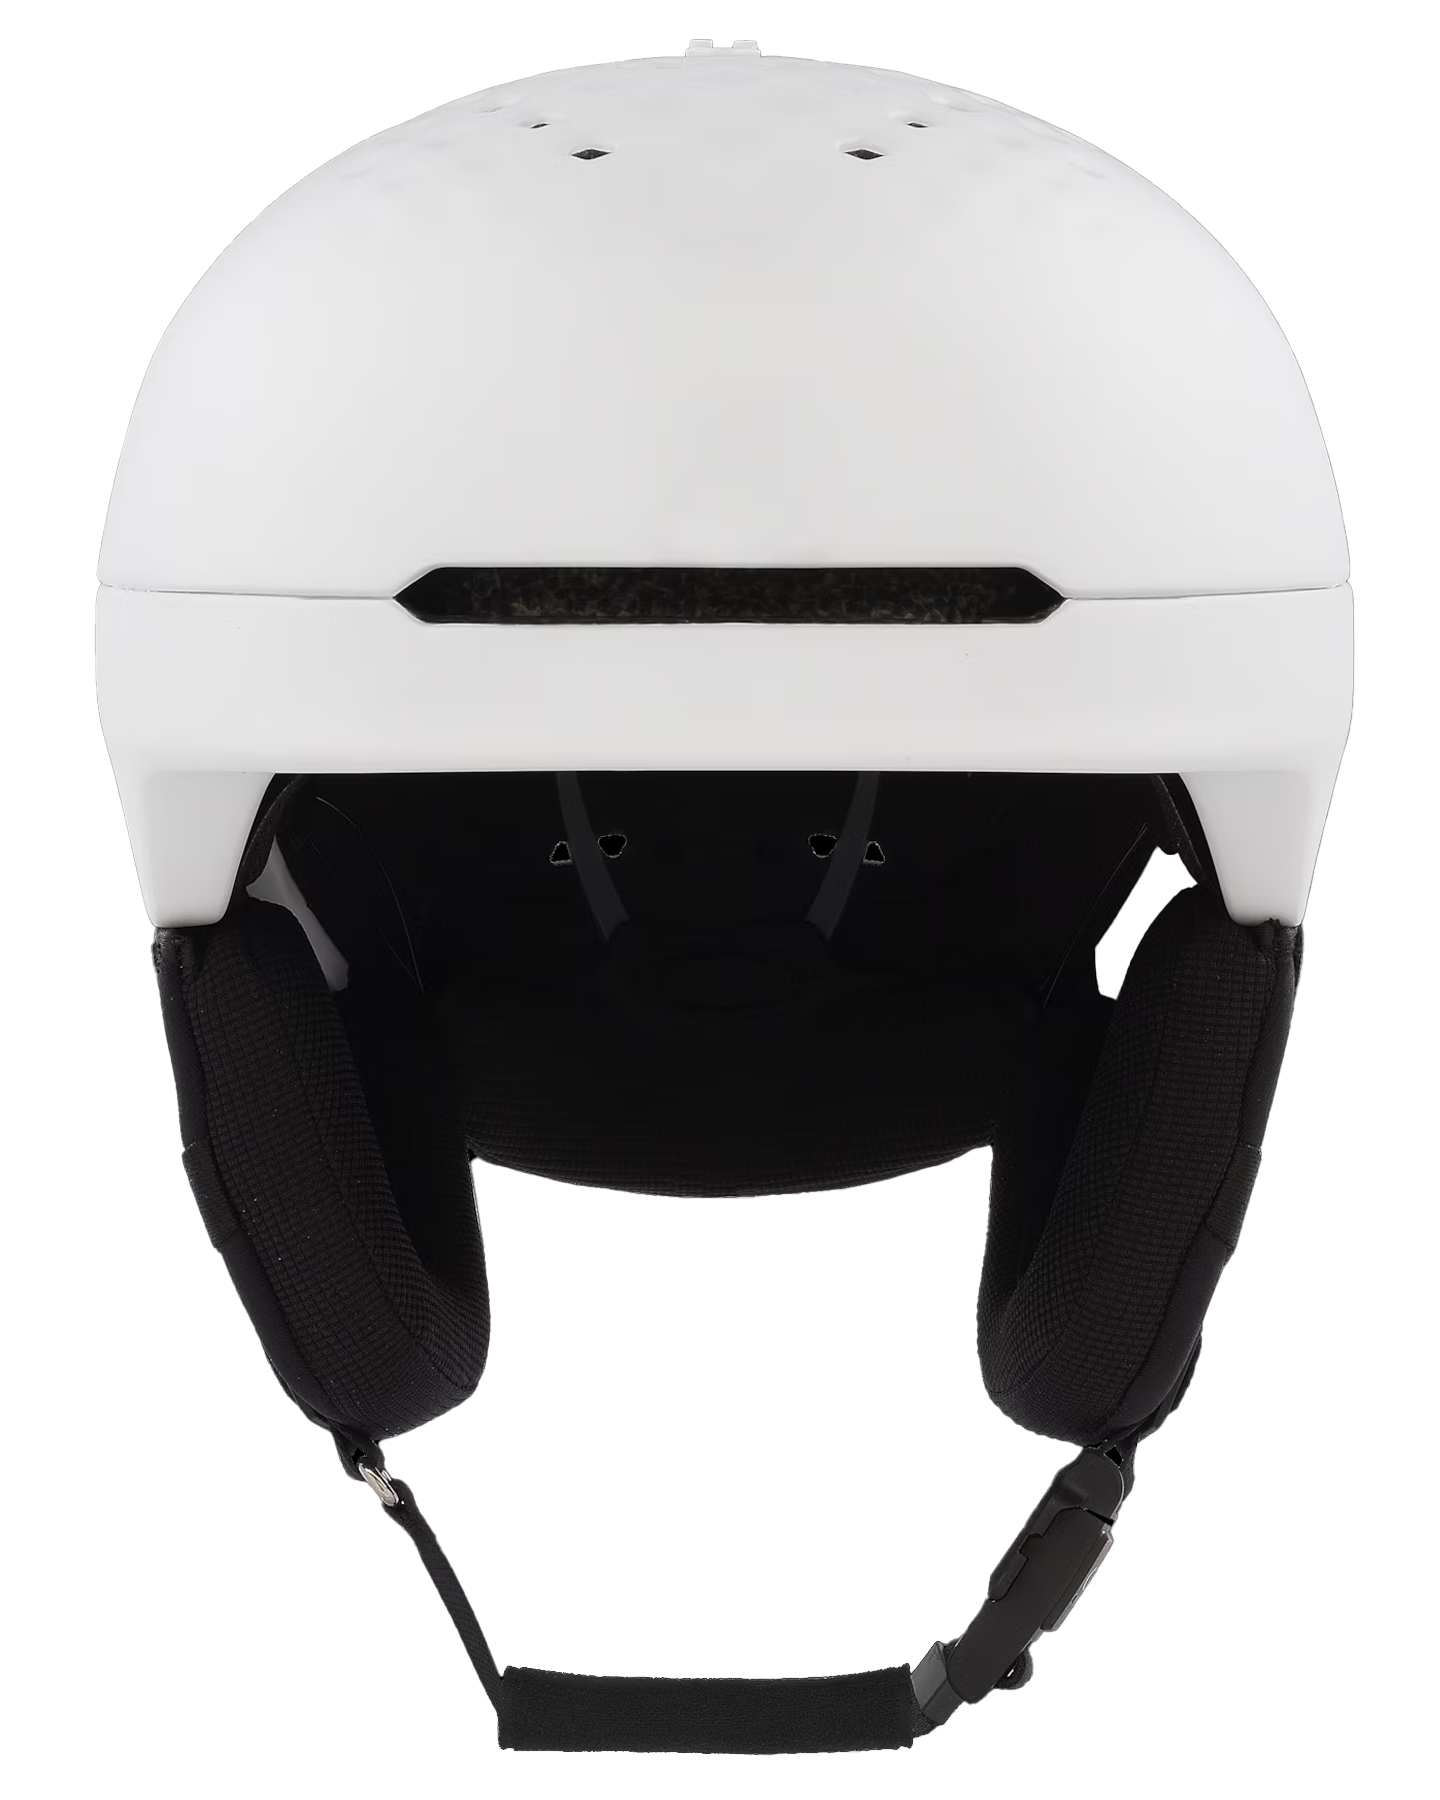 Oakley Mod3 Snow Helmet - Asia Fit - White Men's Snow Helmets - SnowSkiersWarehouse